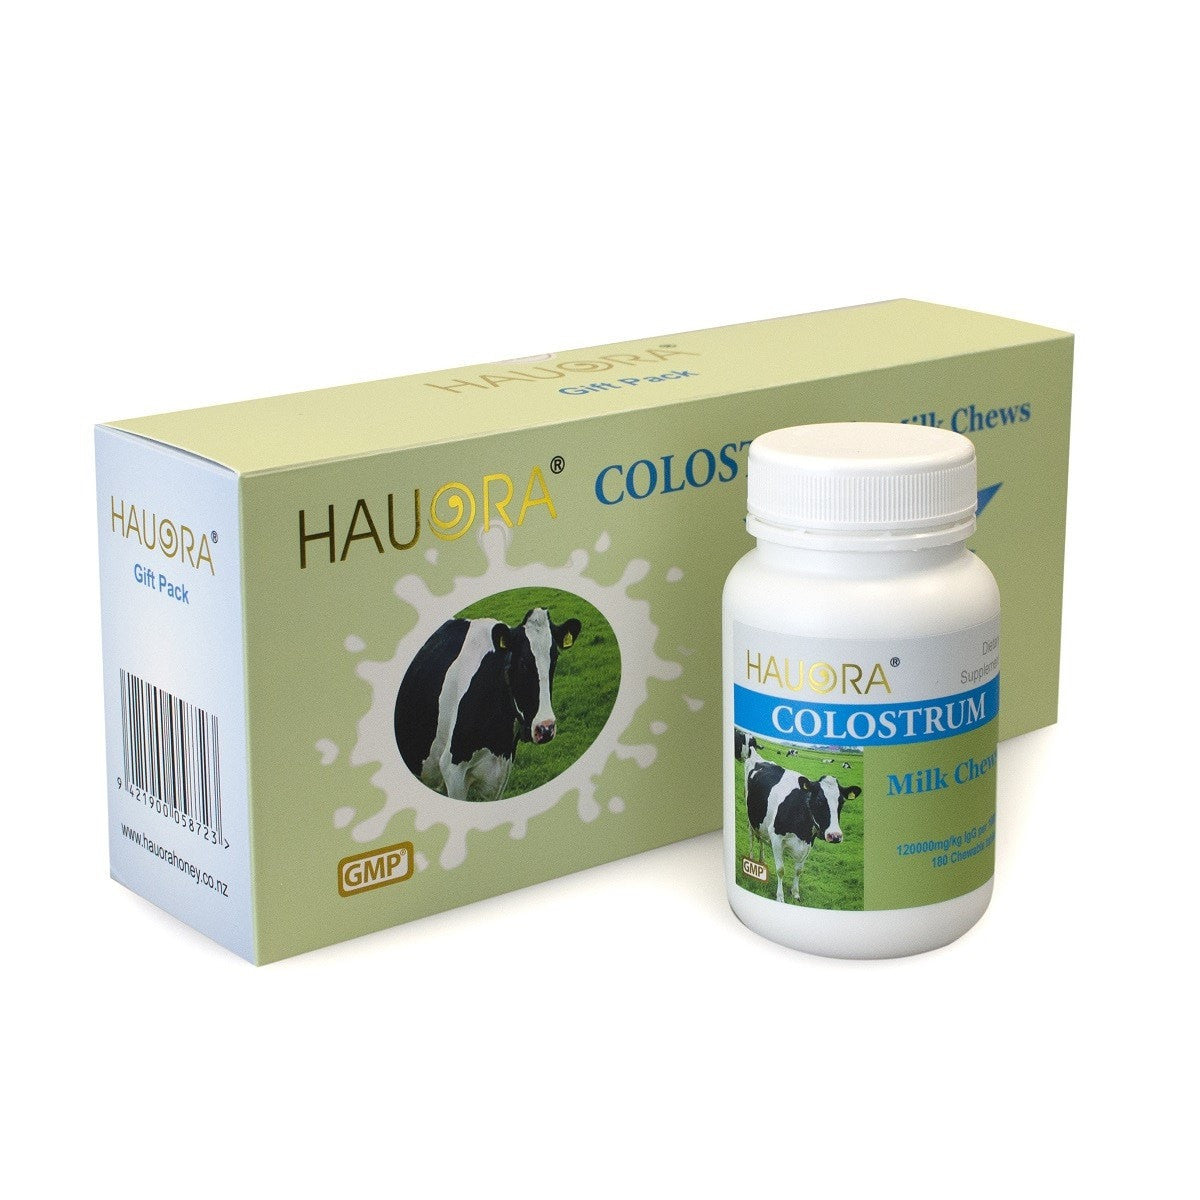 Hauora Colostrum 120000mg/KG Gift Pack